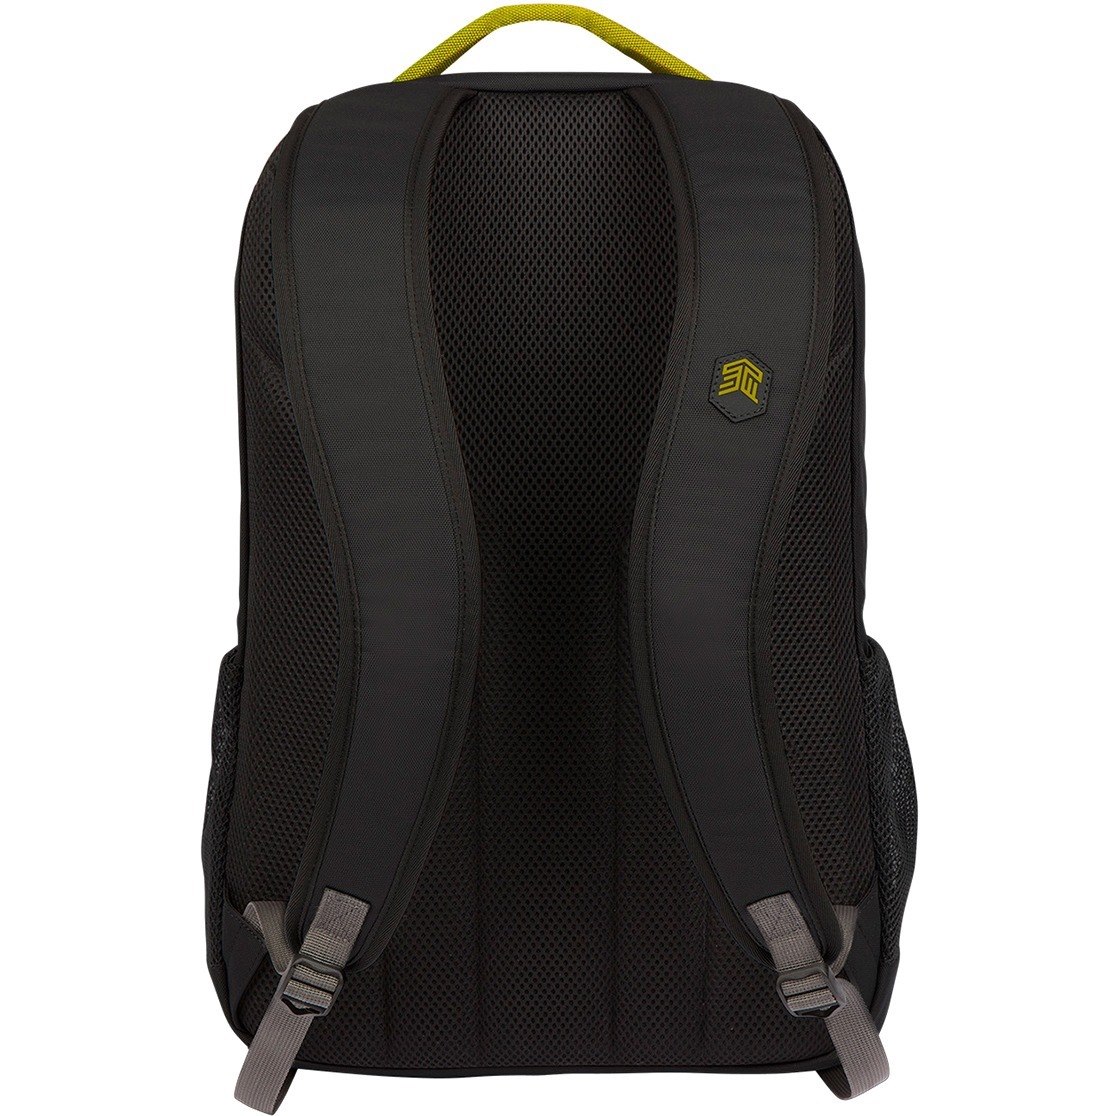 STM Goods Trilogy Backpack - Fits Up To 15" Laptop - Black - Retail